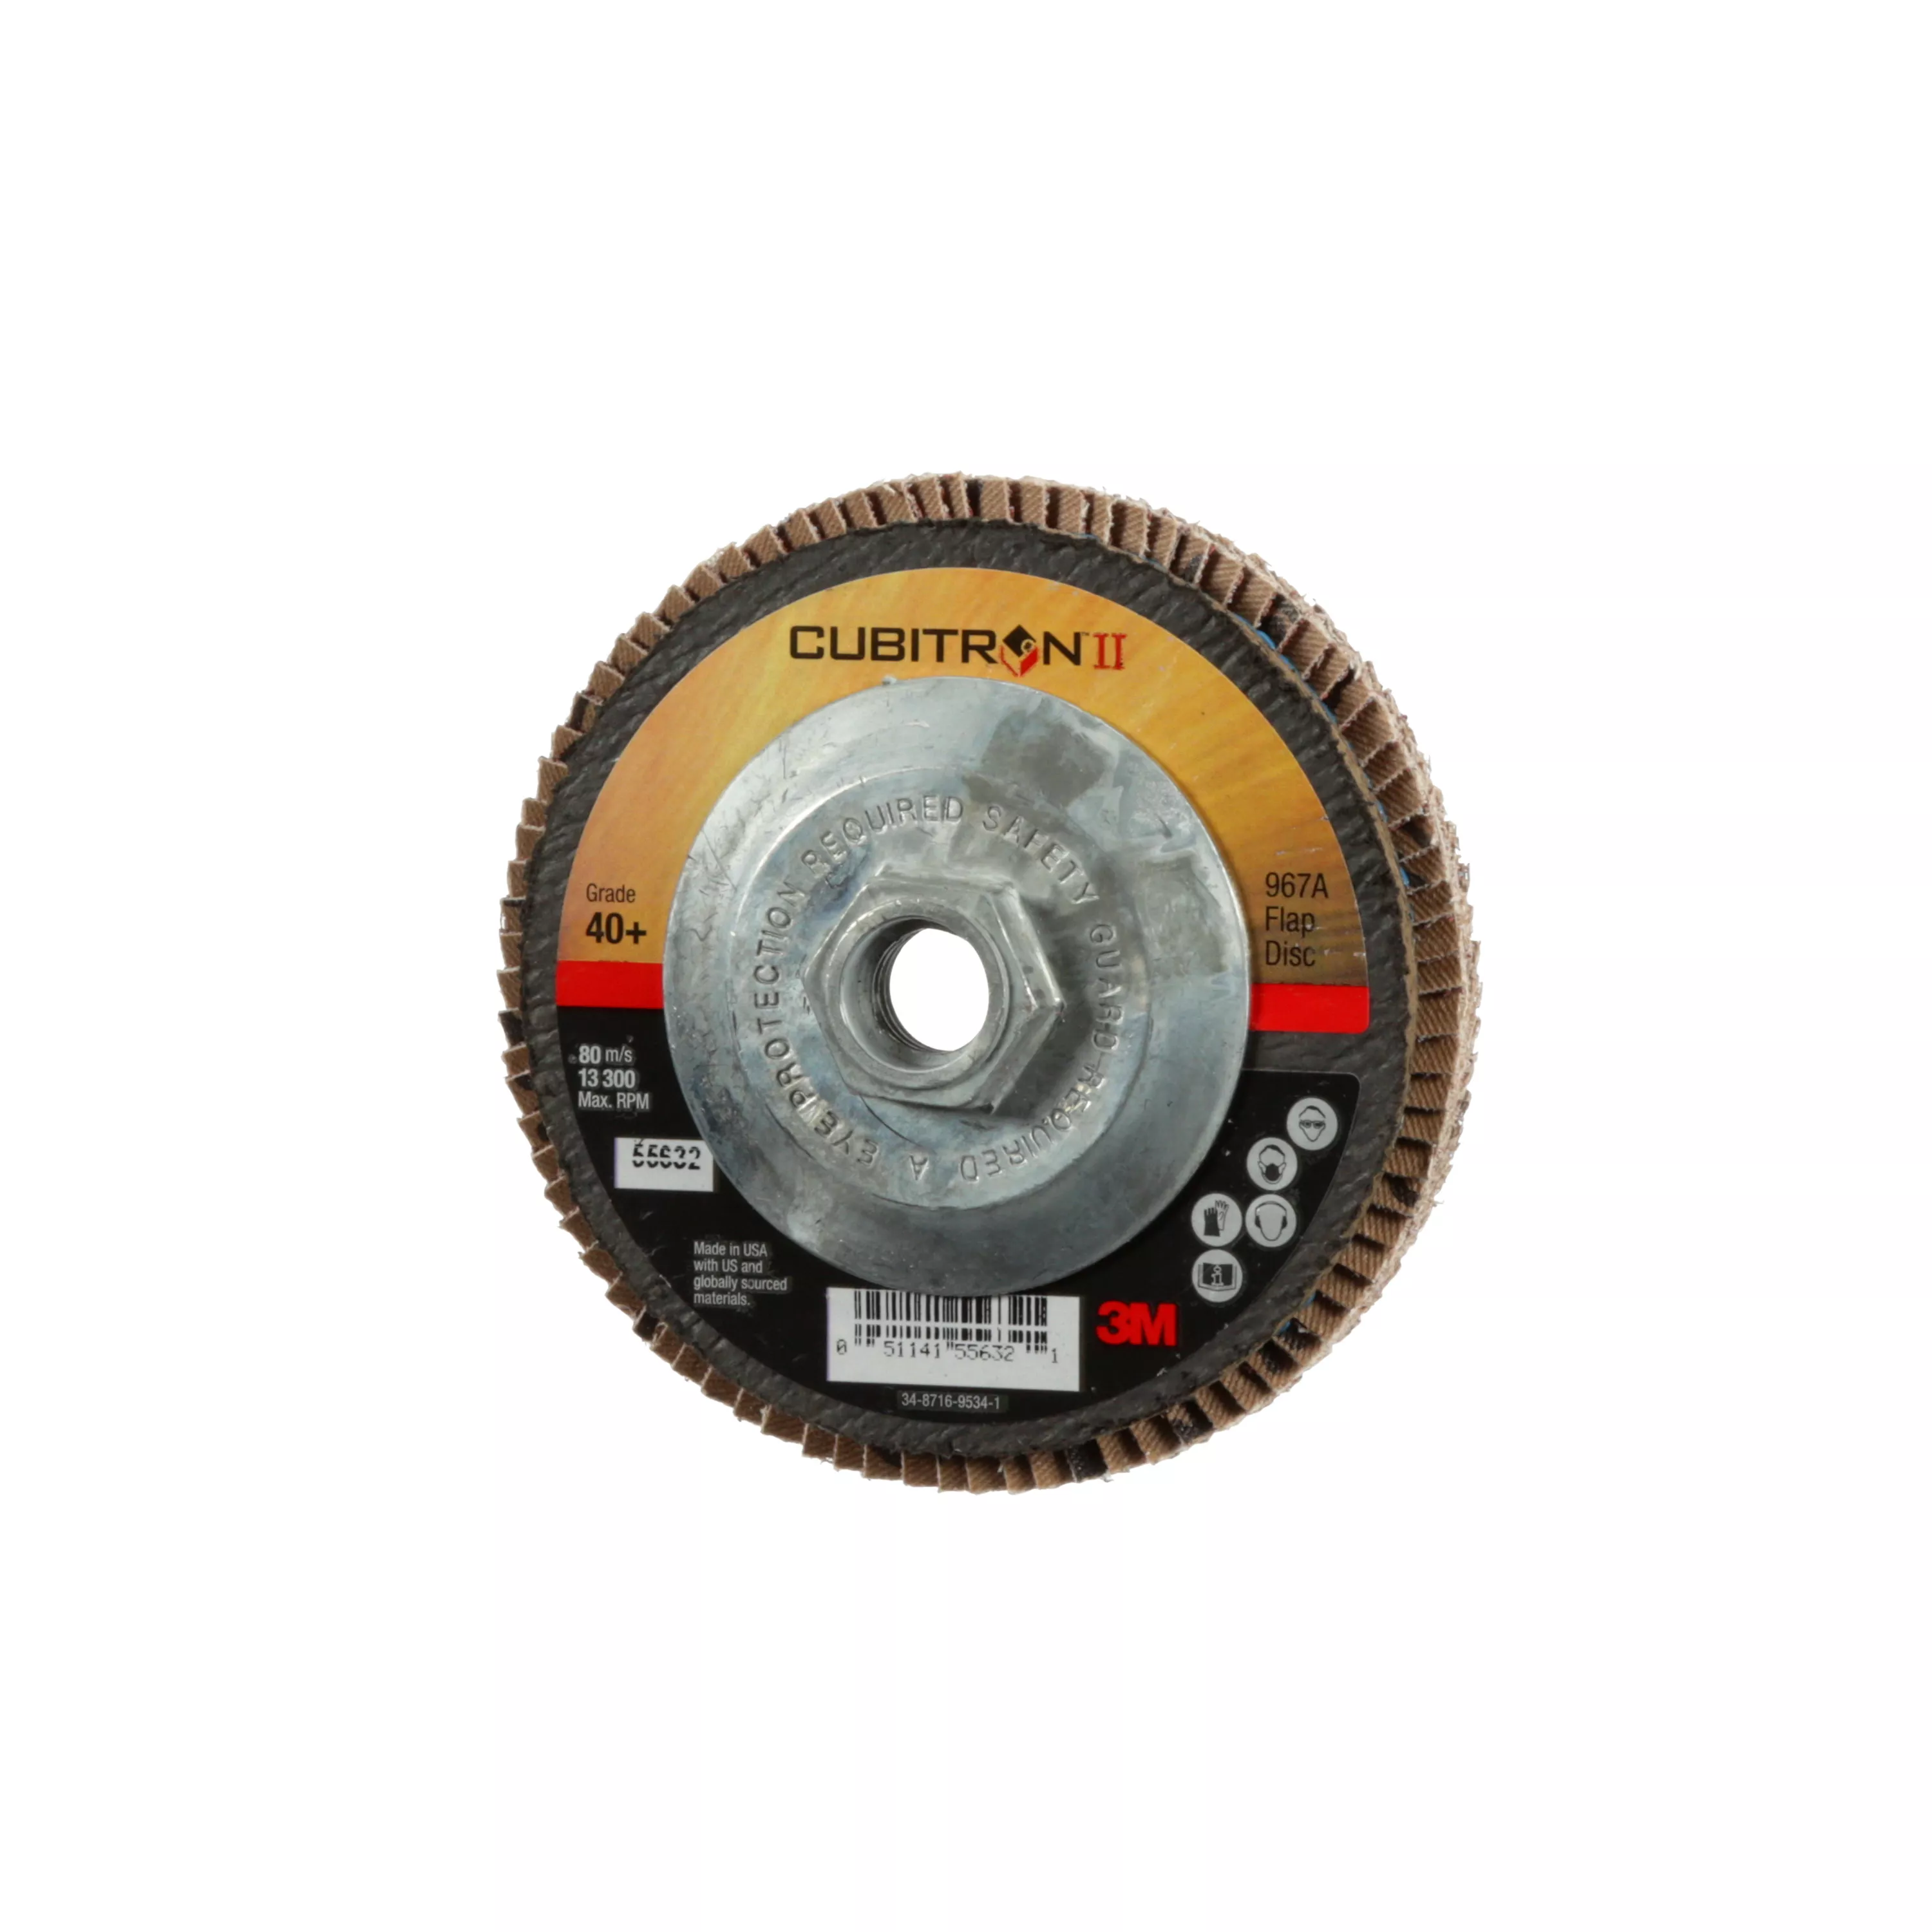 SKU 7010363301 | 3M™ Cubitron™ II Flap Disc 967A